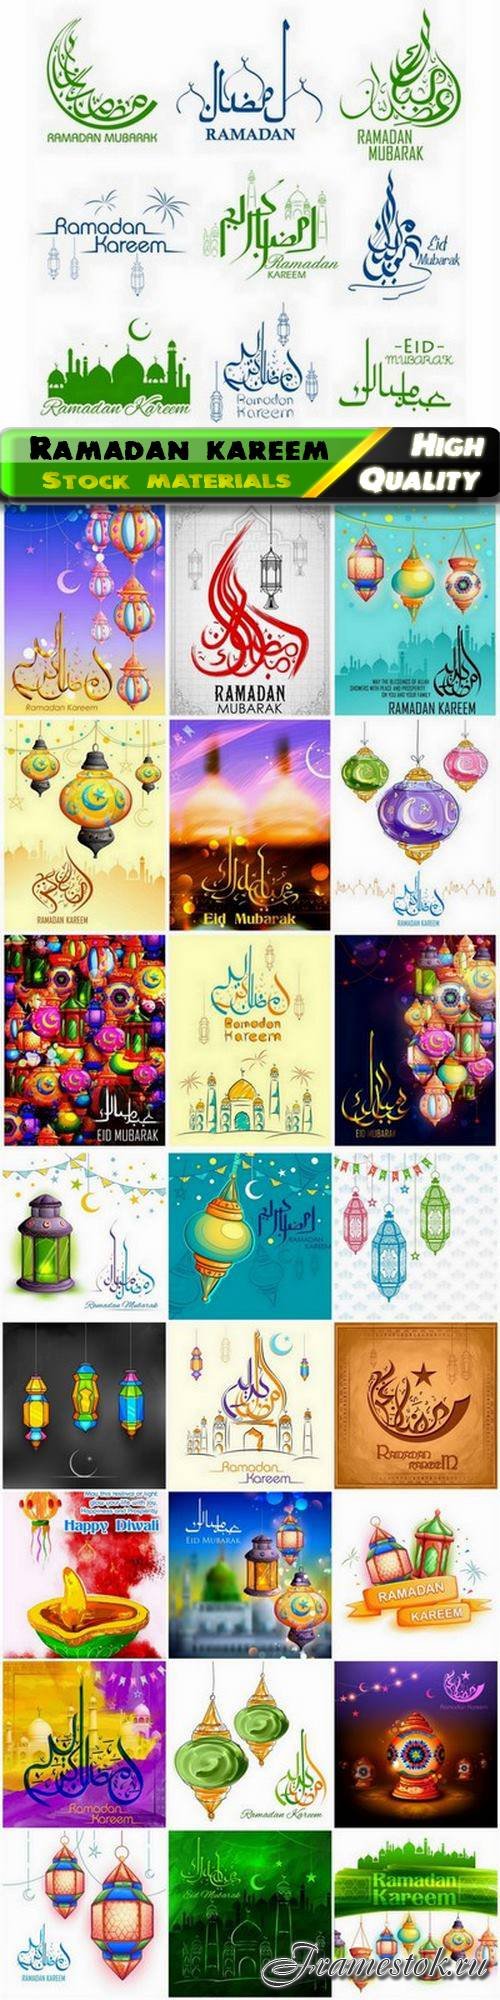 Eid mubarak and ramadan kareem holiday lamps - 25 Eps